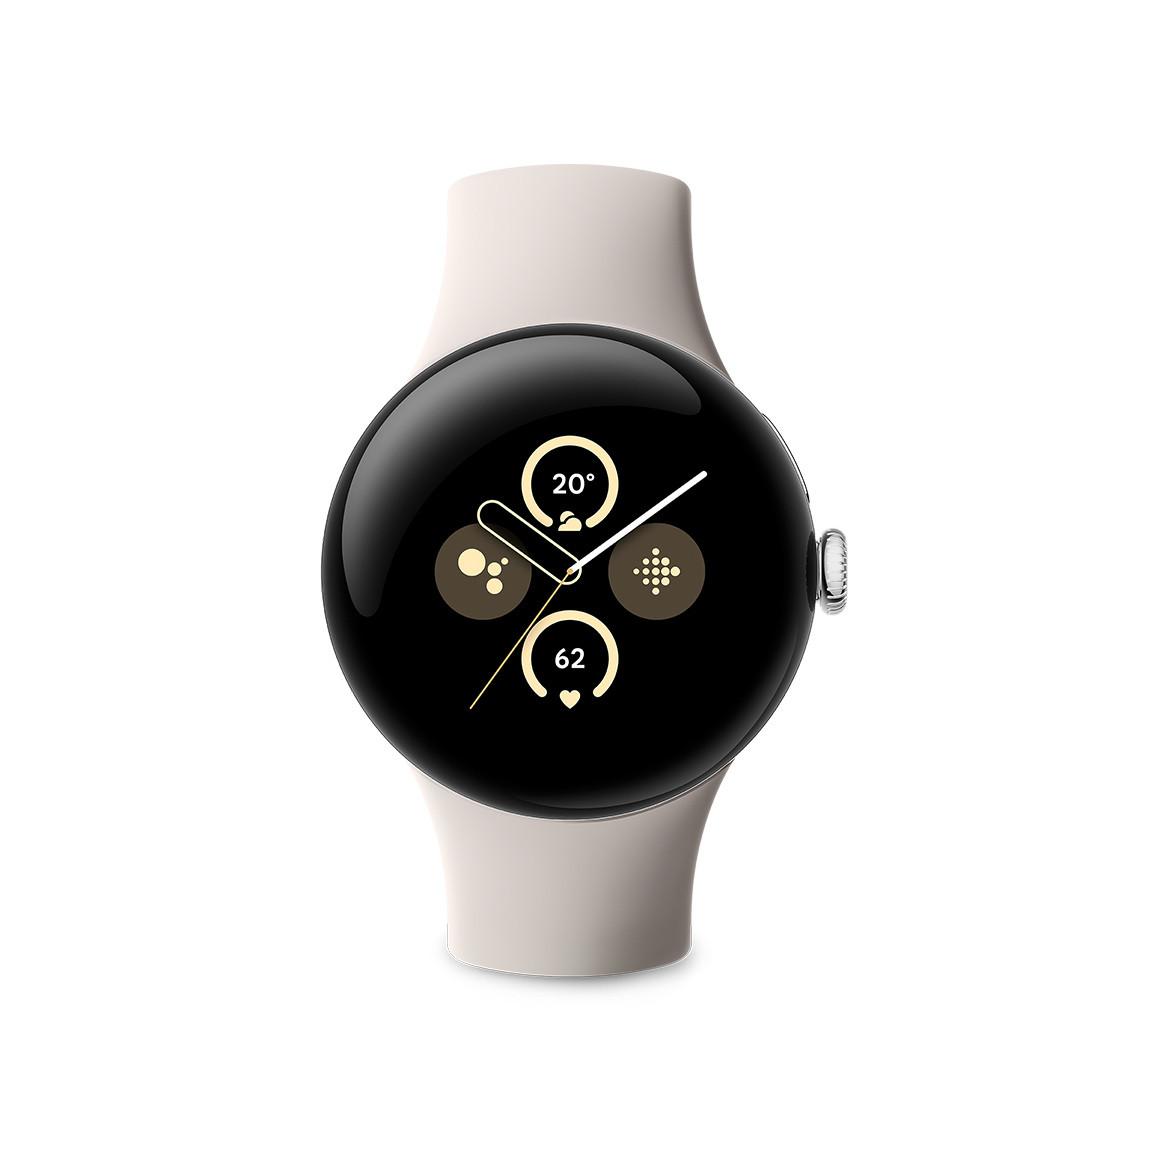 Google Pixel Watch 2 - WLAN Smartwatch - Silber mit Porcelain Armband